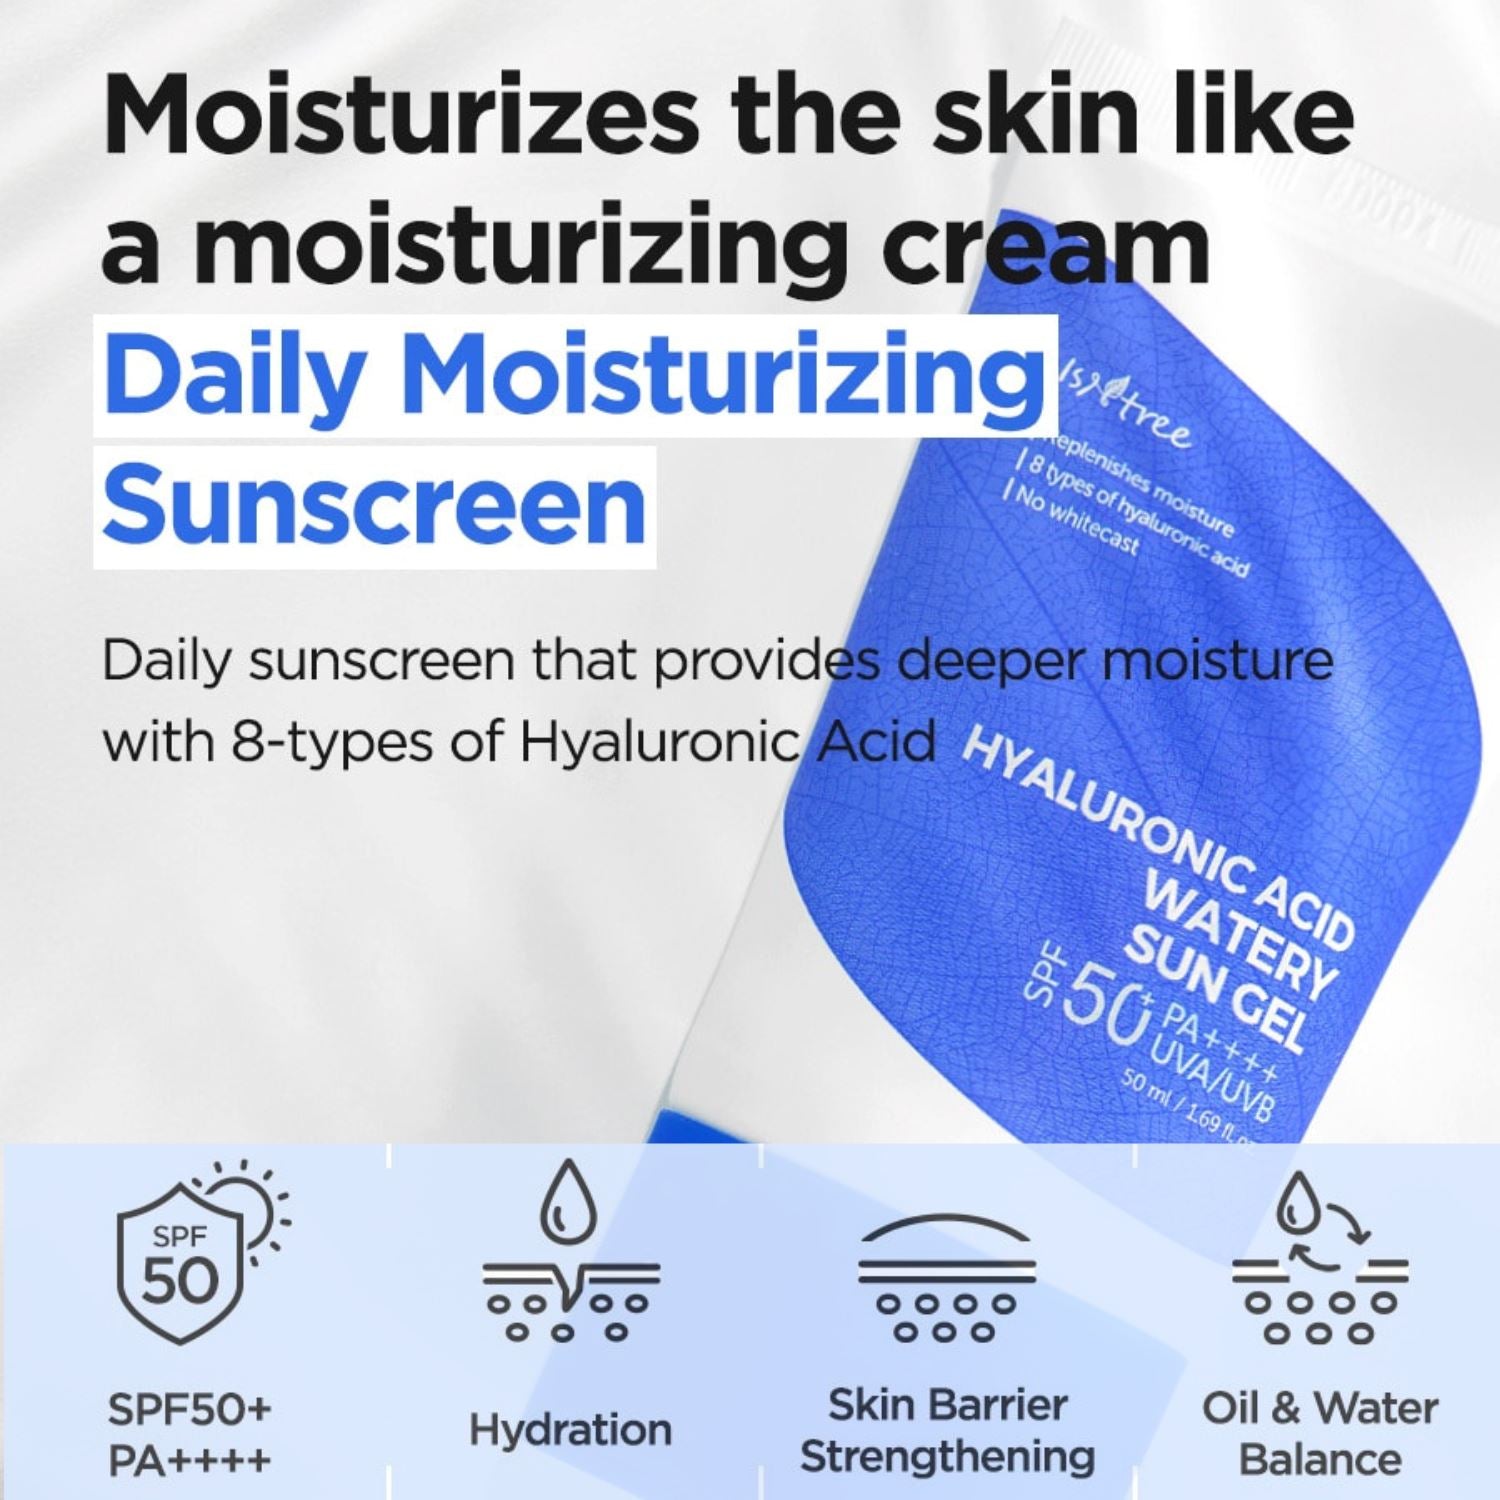 Isntree Hyaluronic Acid Watery Sun Gel SPF 50+ PA++++ 50ml Skin Care ISNTREE ORION XO Sri Lanka